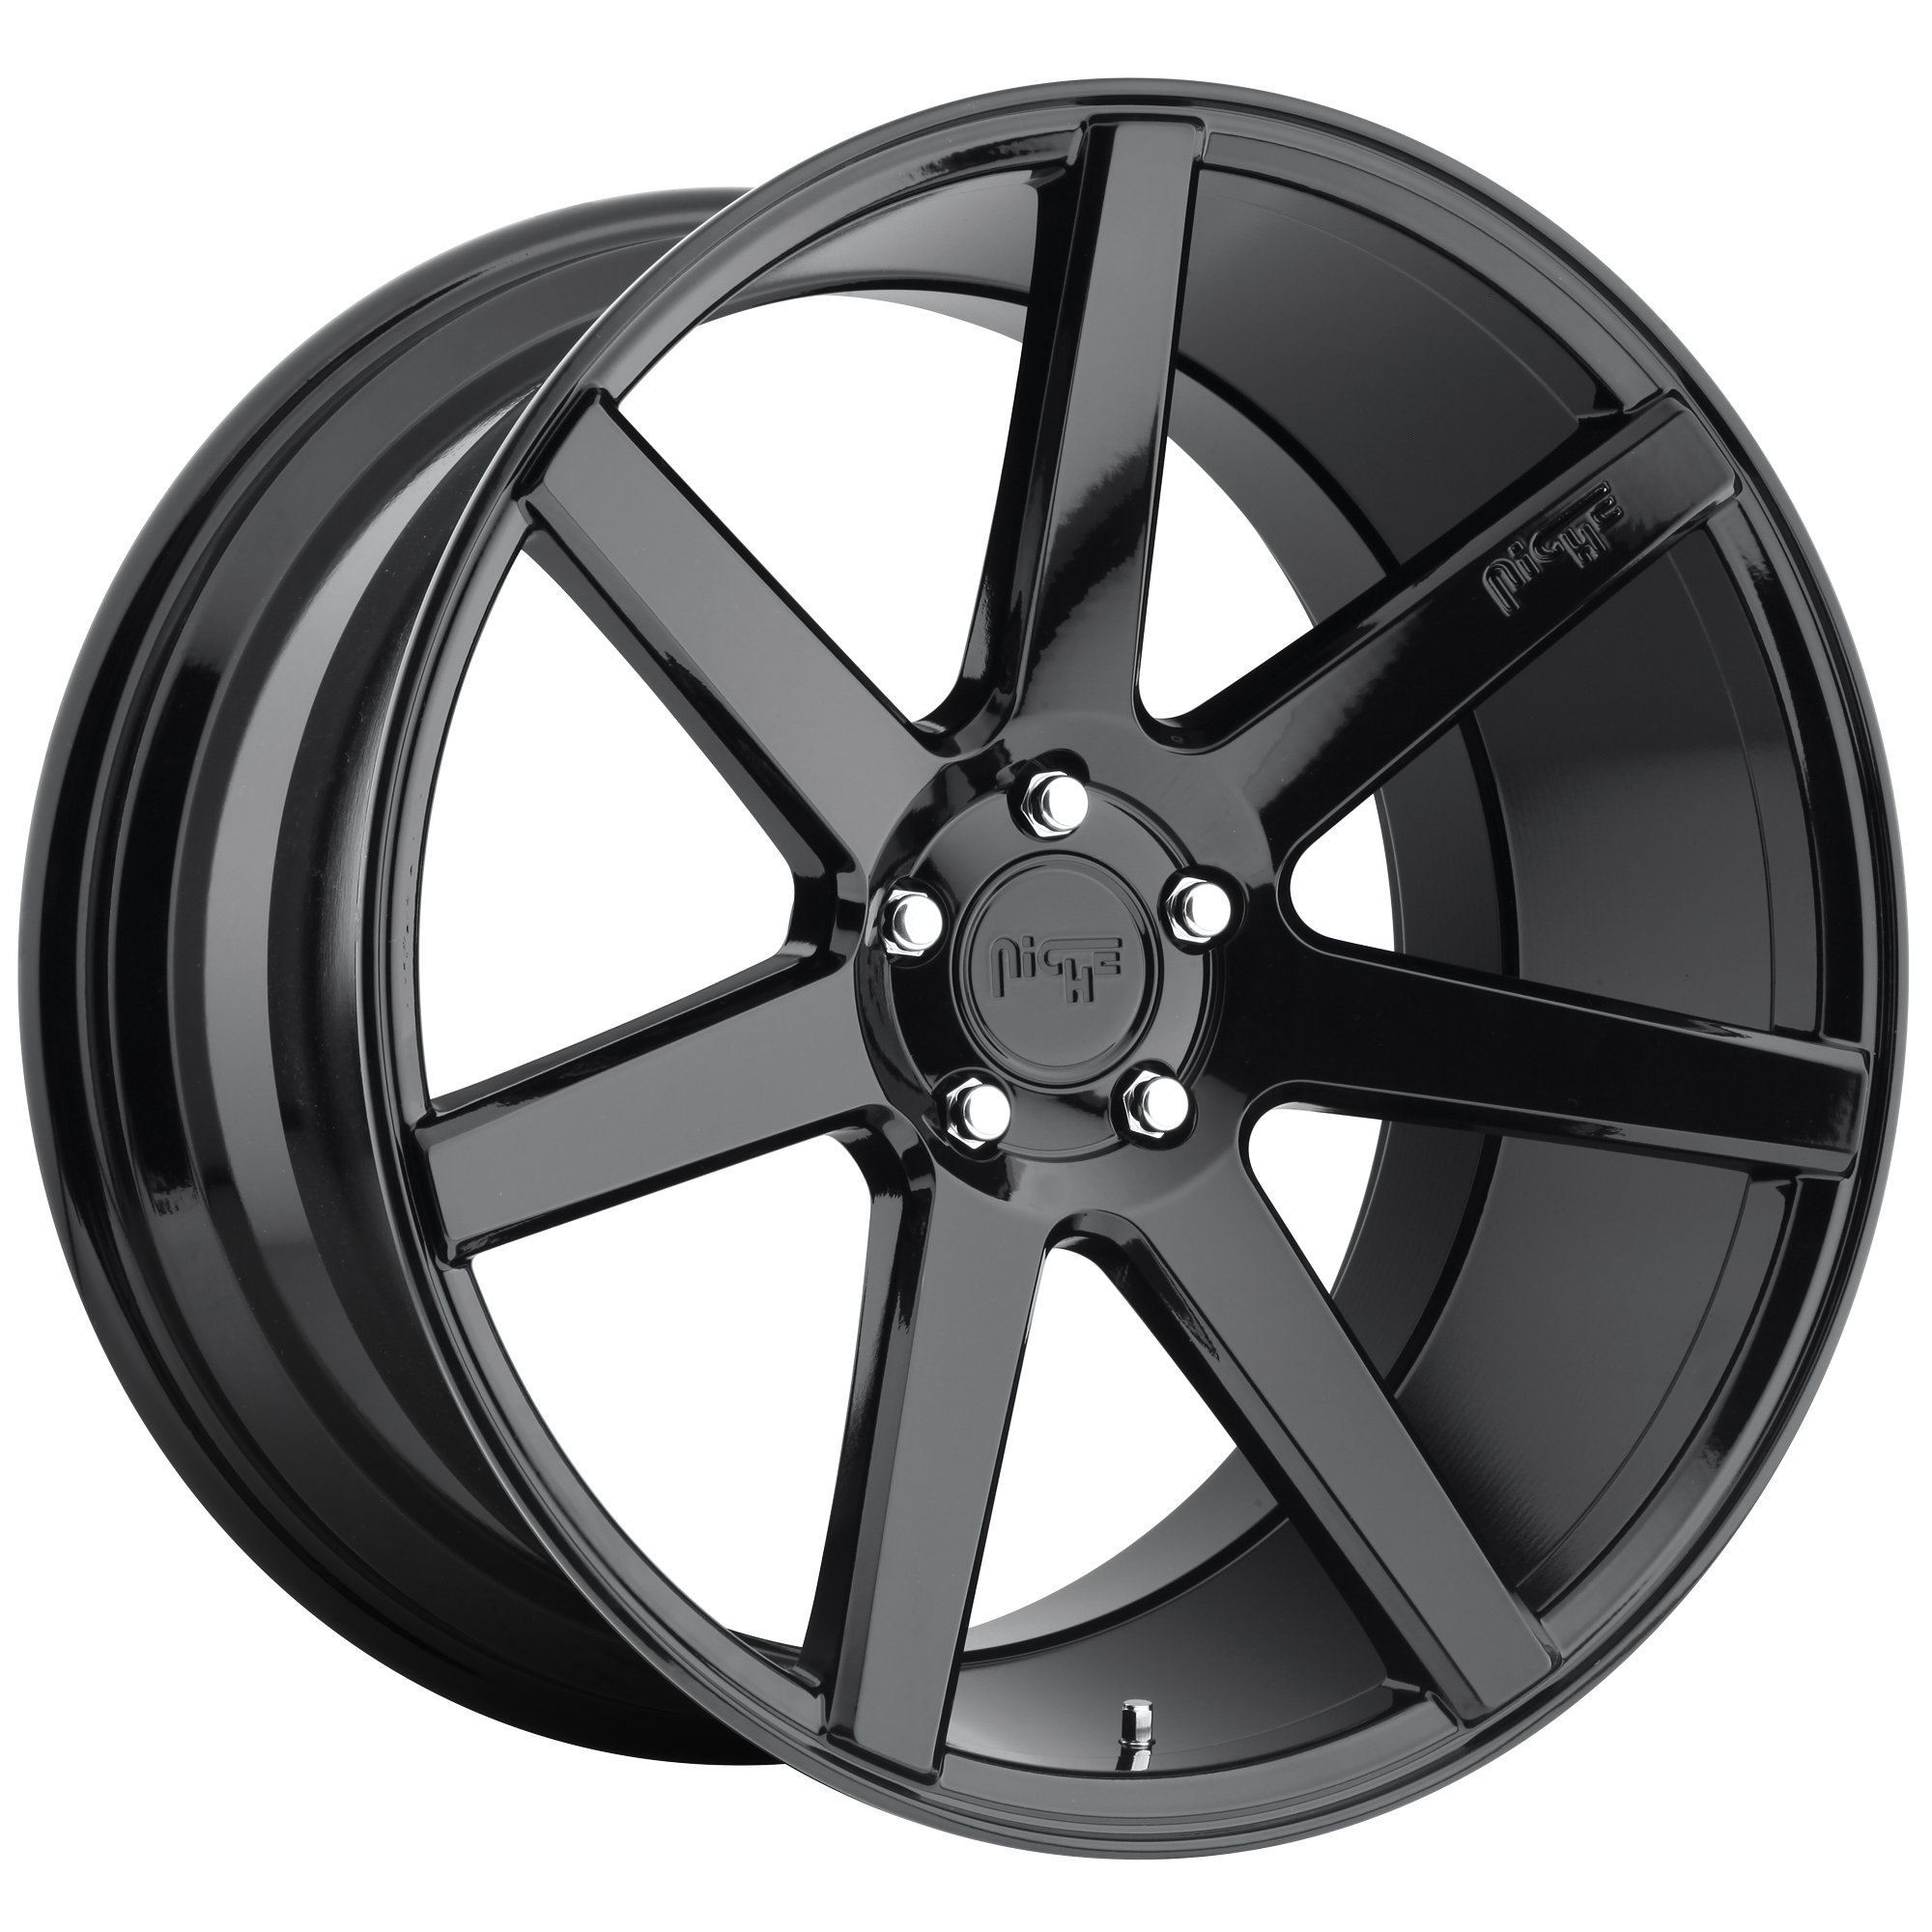 VERONA 22x10 5x130.00 GLOSS BLACK (35 mm) - Tires and Engine Performance